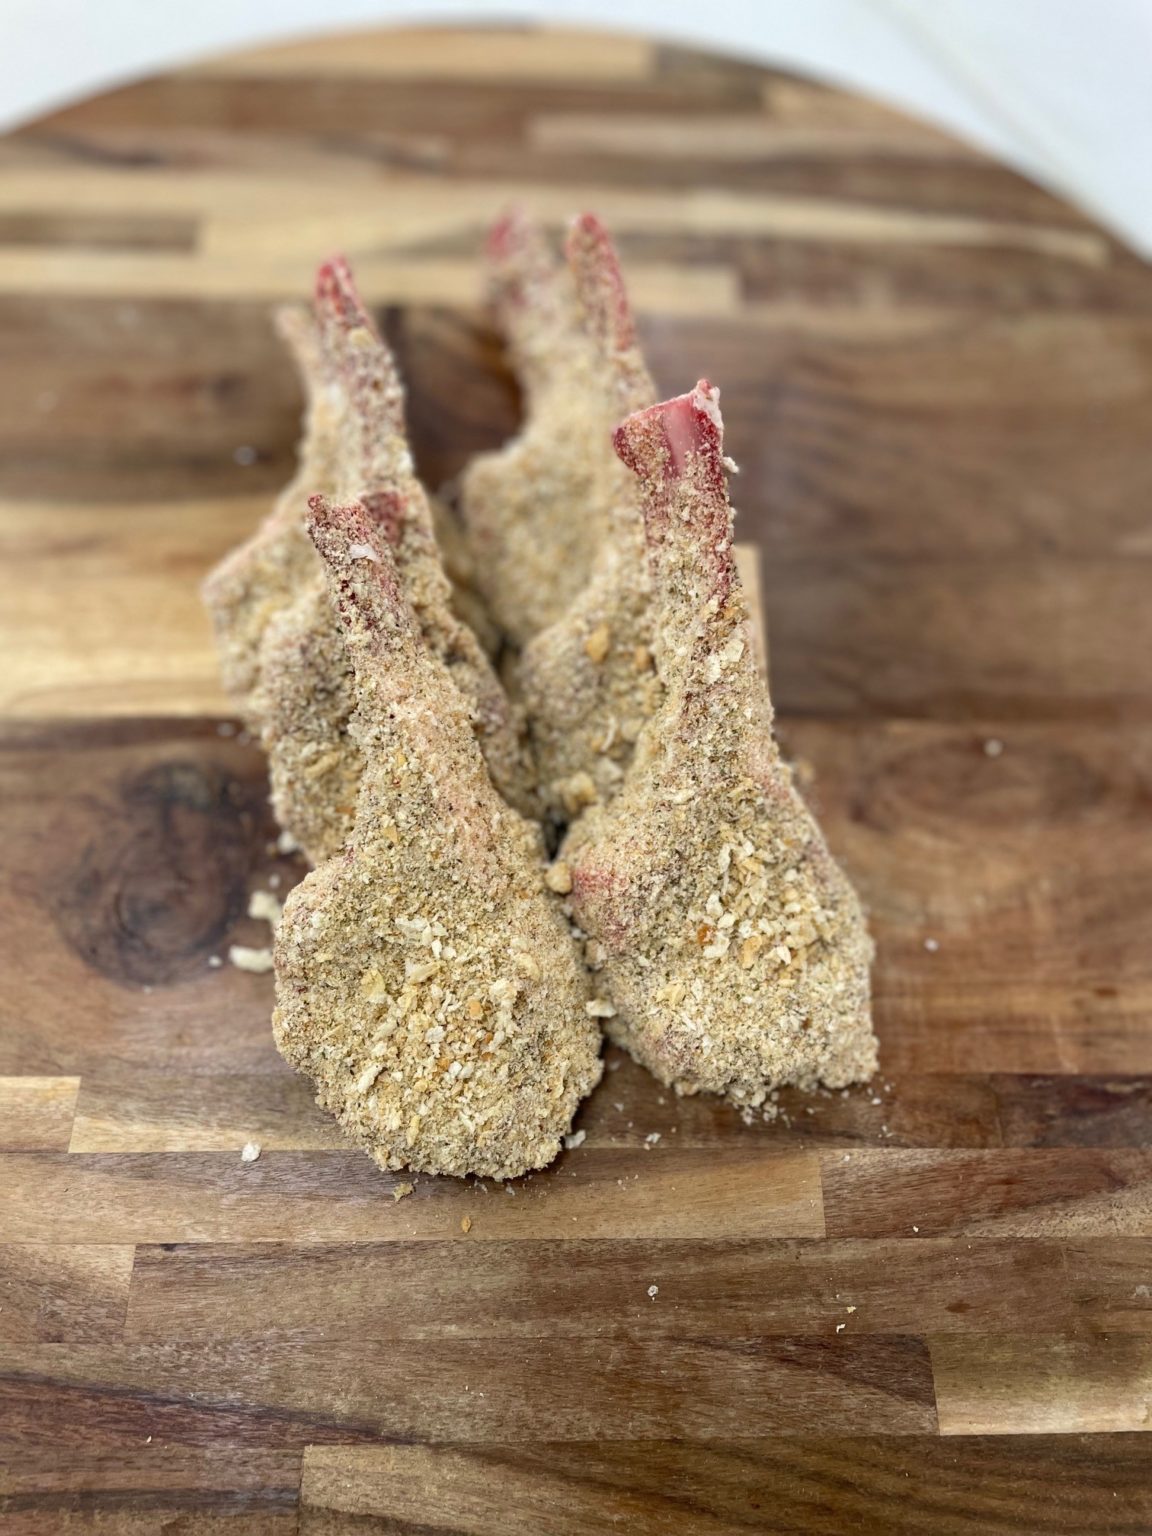 Crumbed lamb cutlets - The Meat Barn Warrnambool